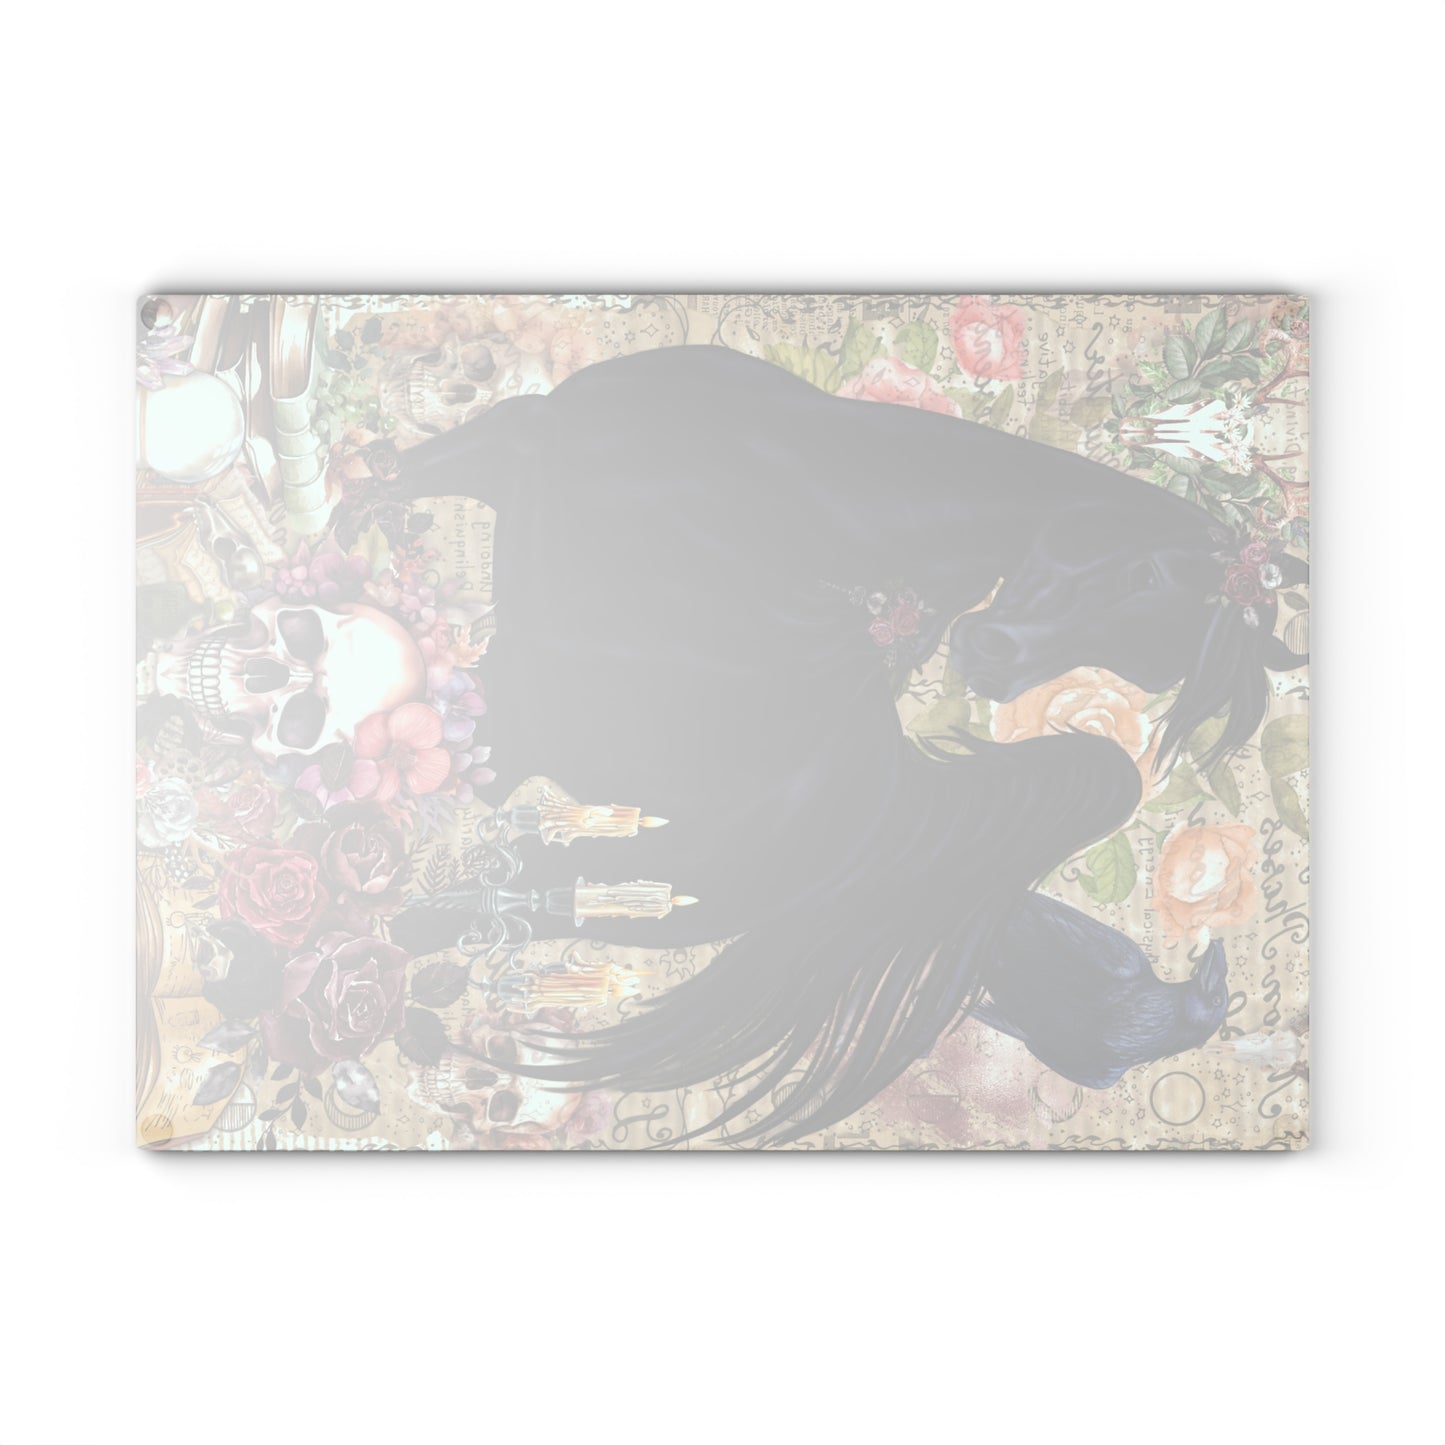 Black Arabian horse gothic witch vampire Victorian goth skull tattoo art Glass Cutting Board